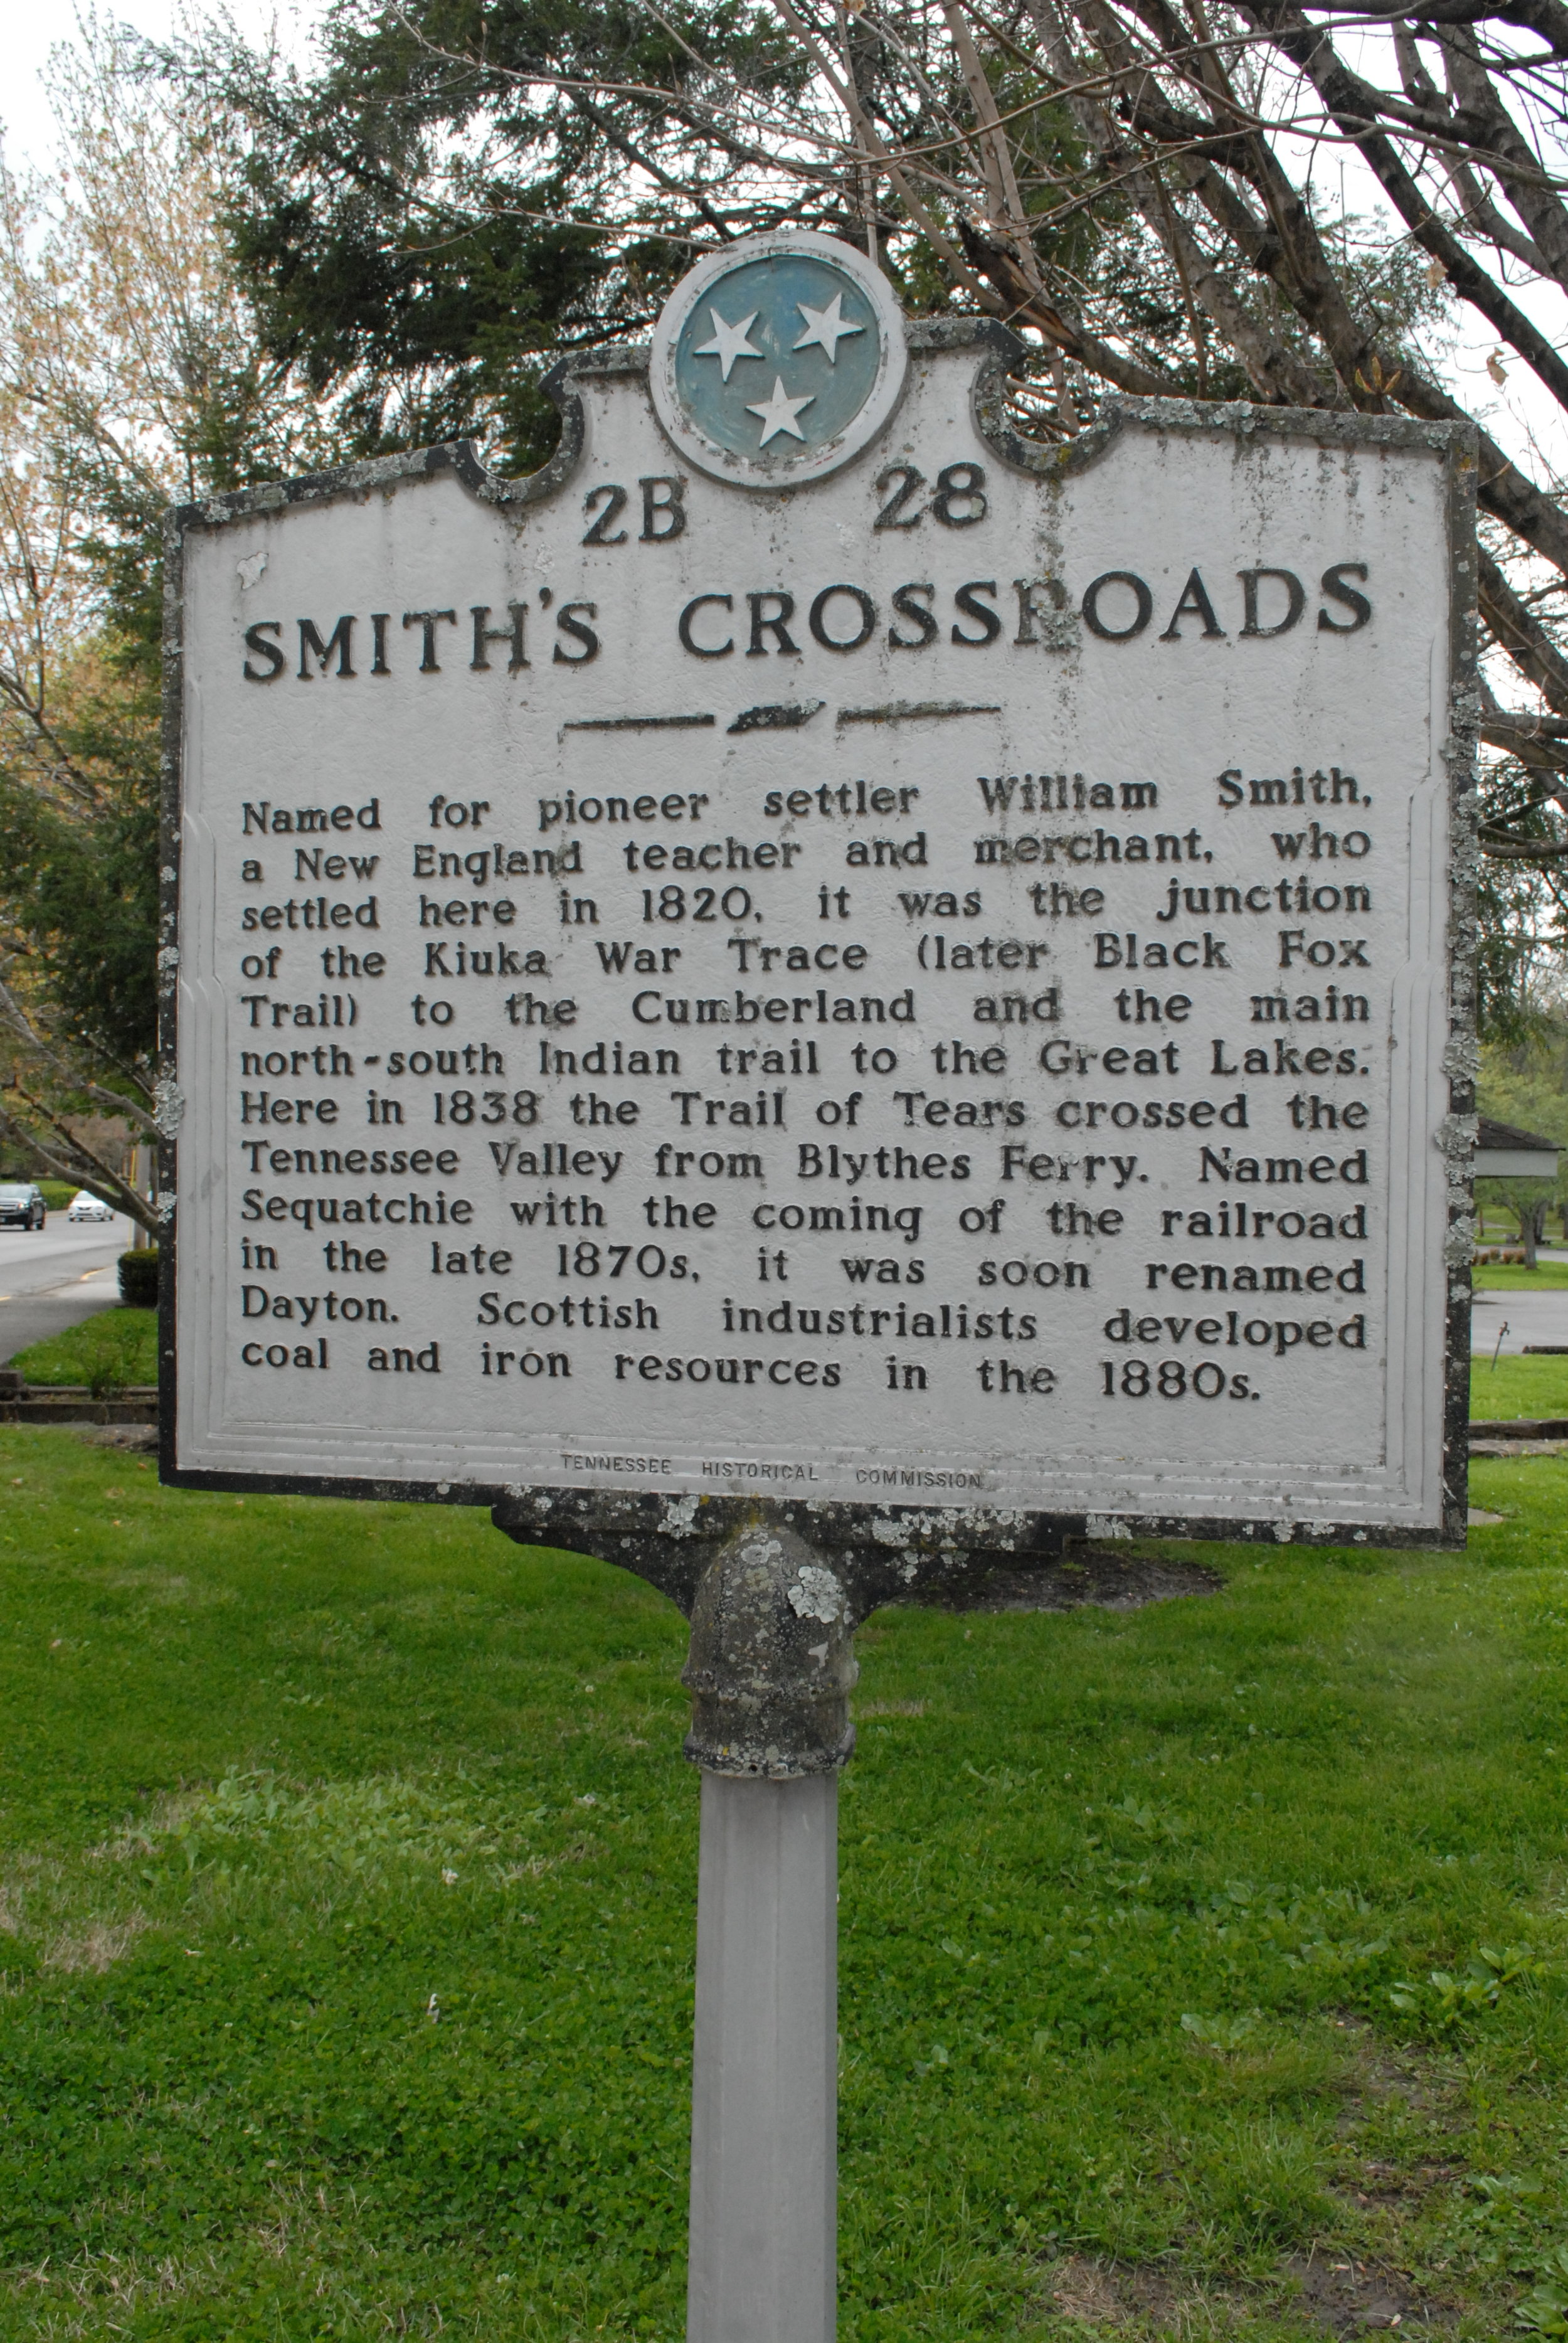 Smith's Crossroads